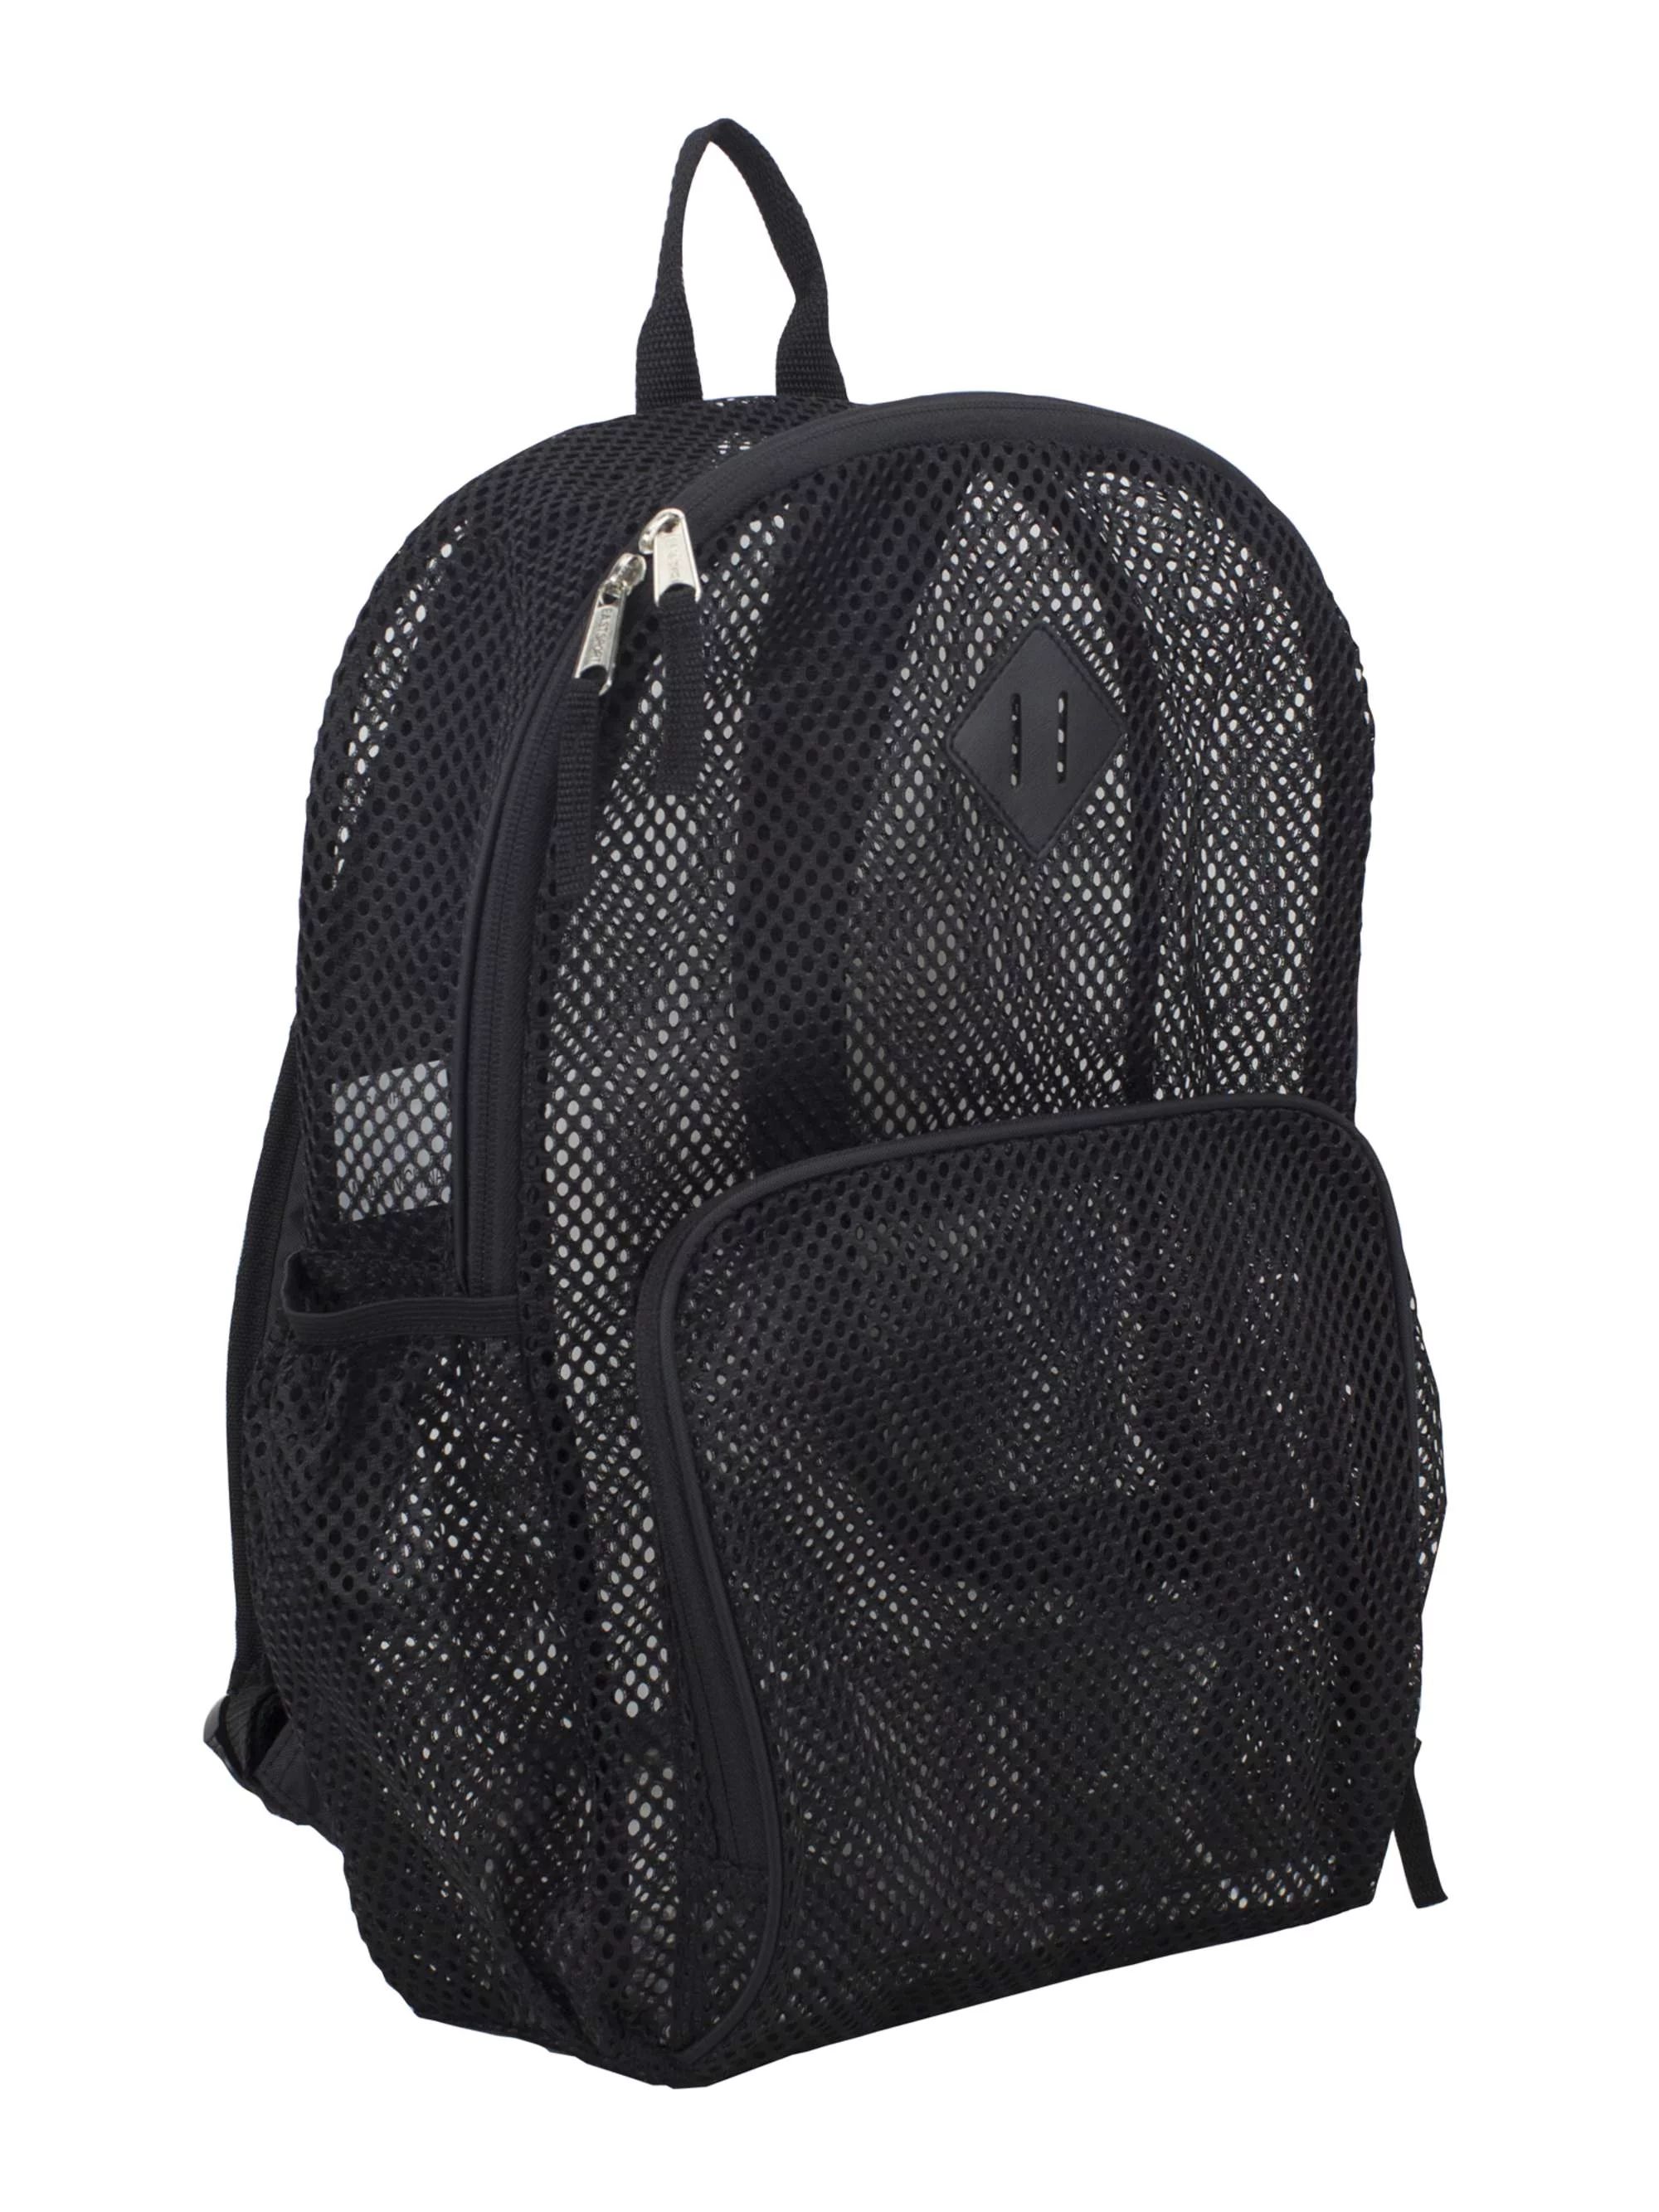 Eastsport Multi-Purpose Mesh Backpack with Front Pocket, Adjustable Straps and Lash Tab, Black | Walmart (US)